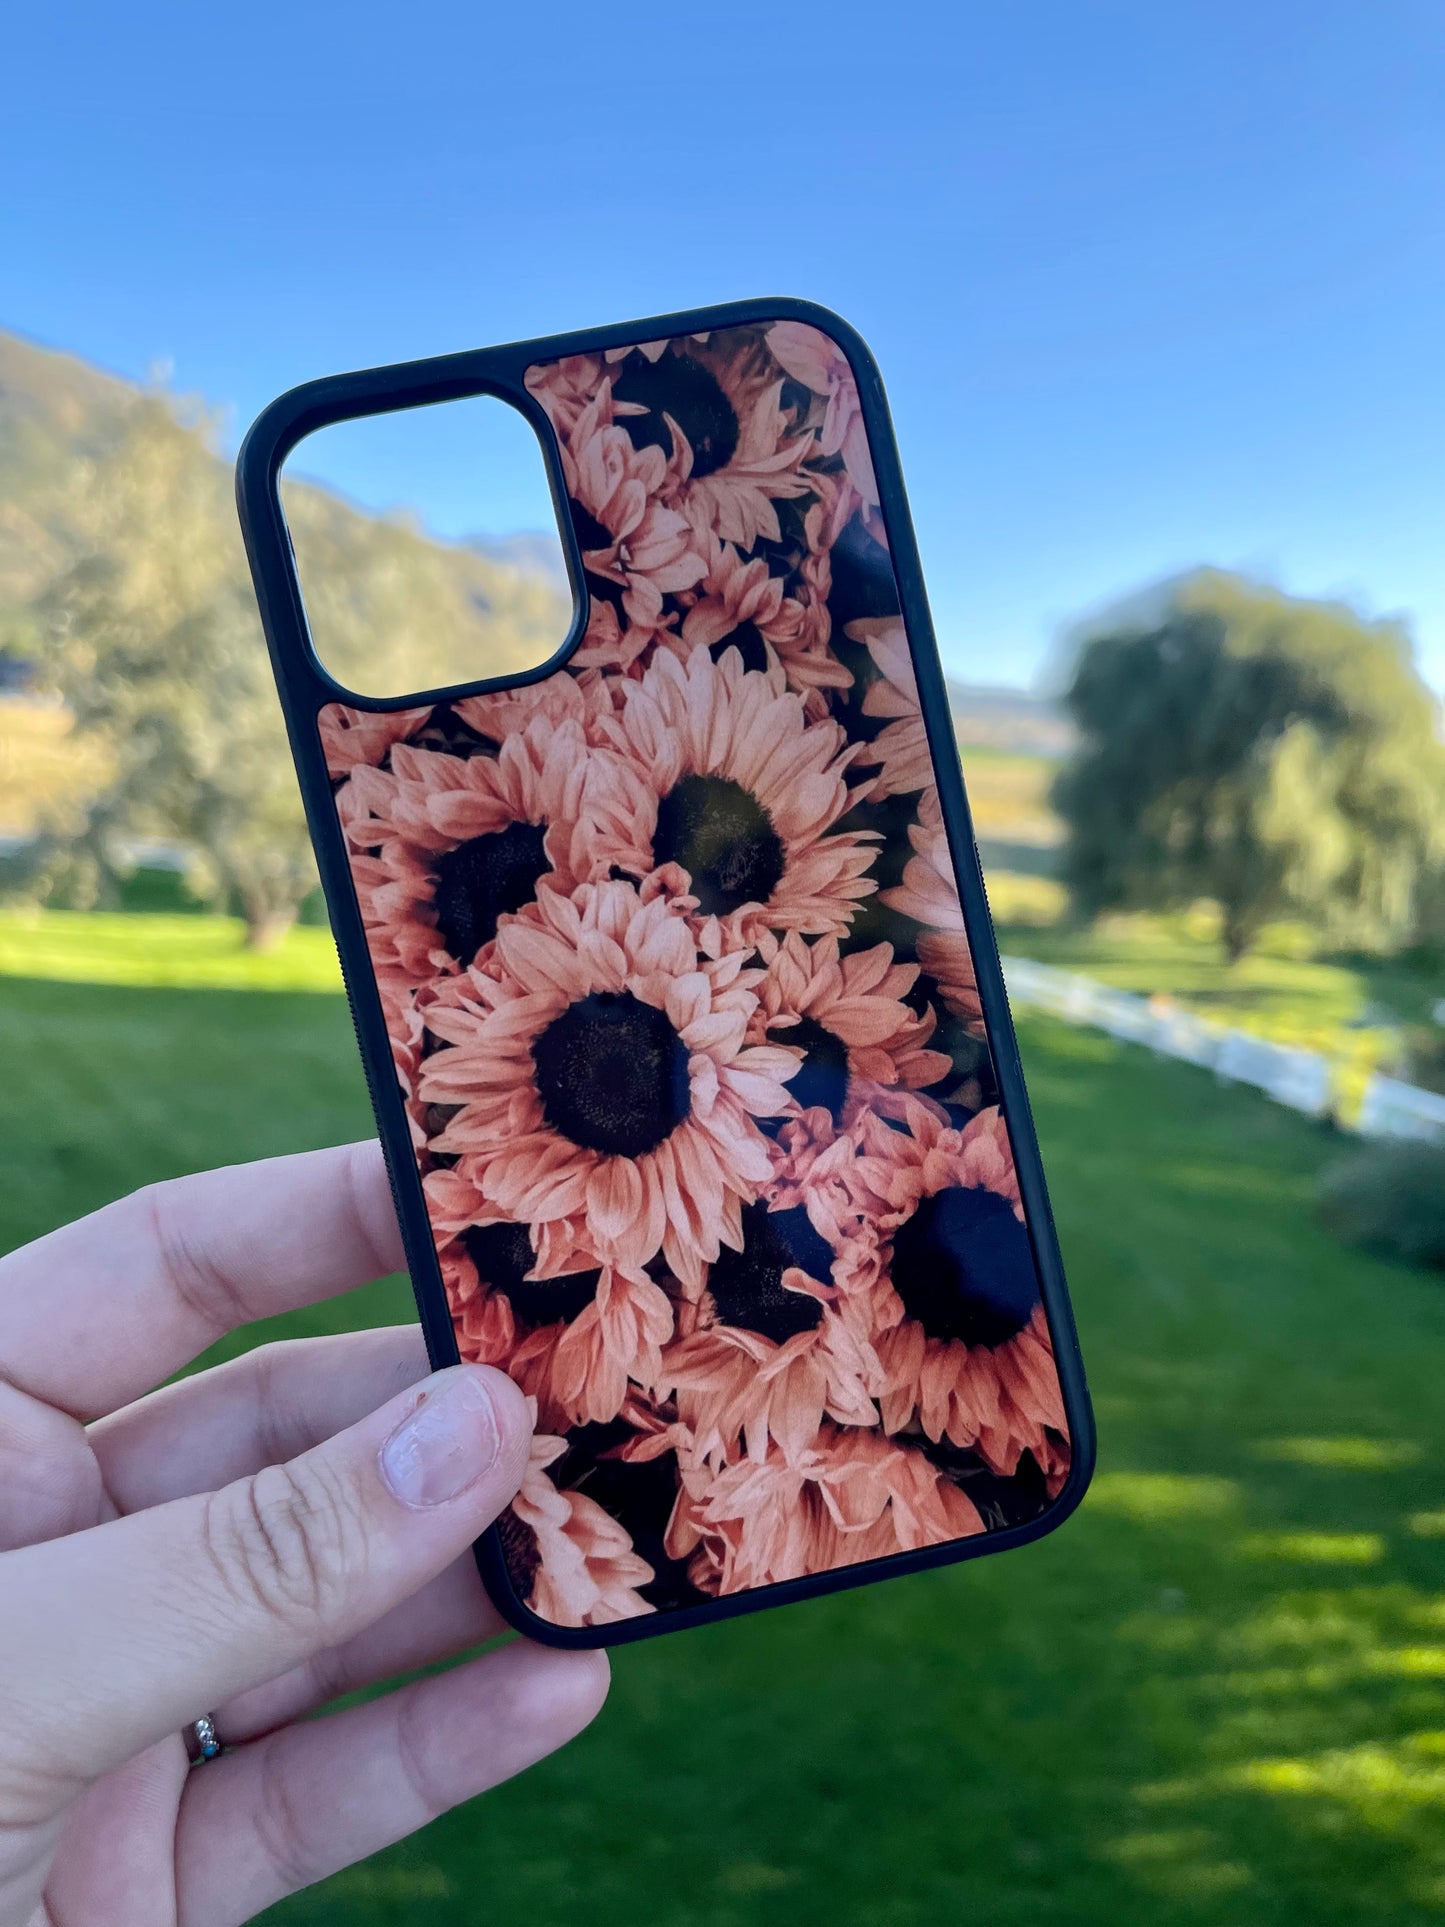 The Sunflower Phone Case